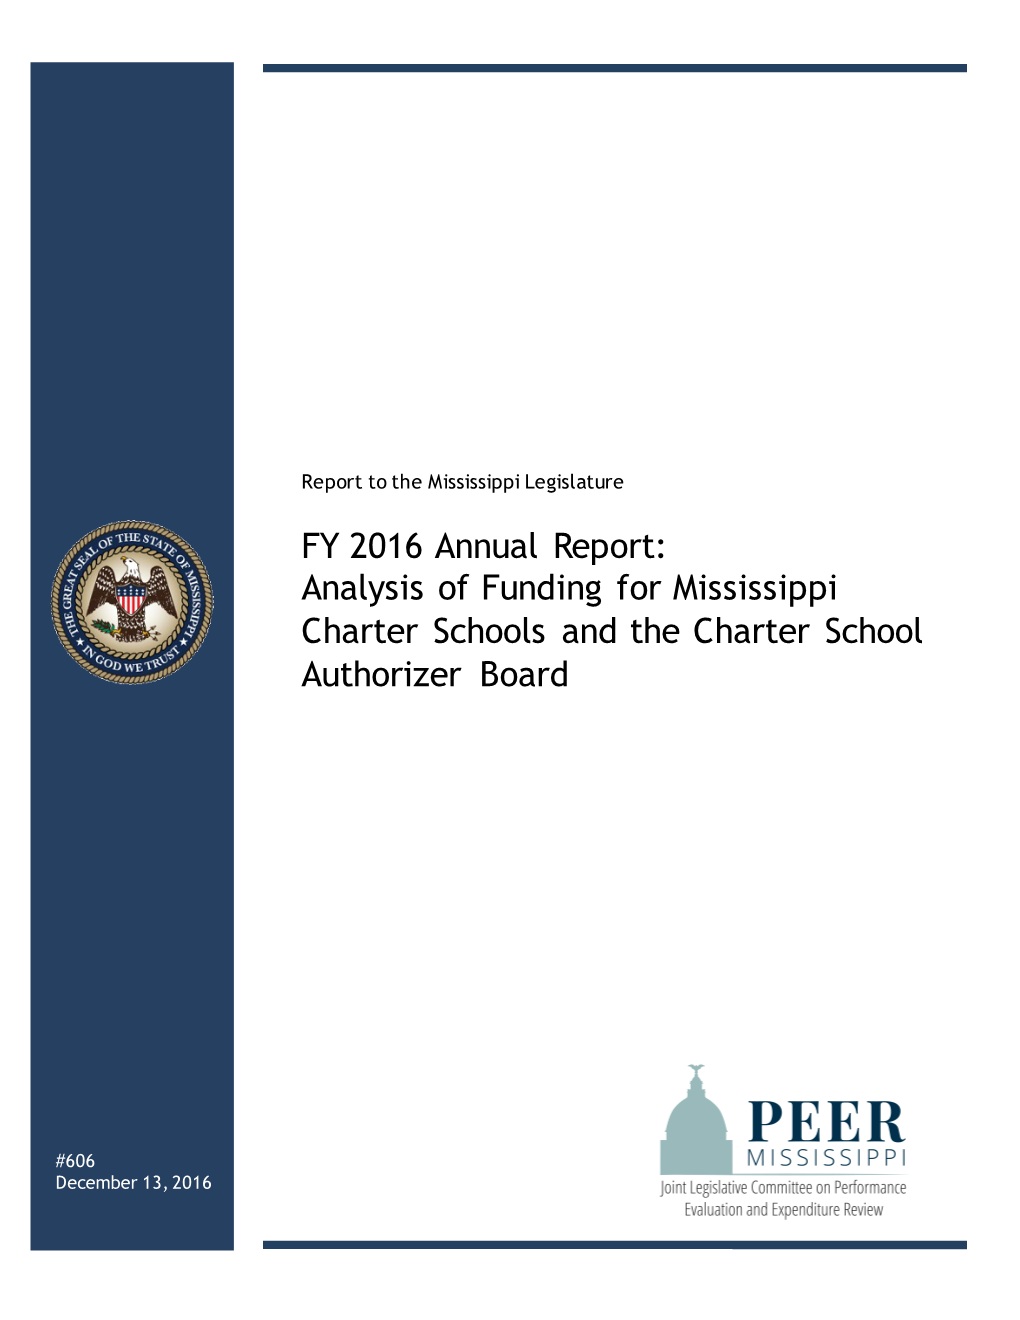 Charter Schools Revised Repot Draft 11.30.16 Ks